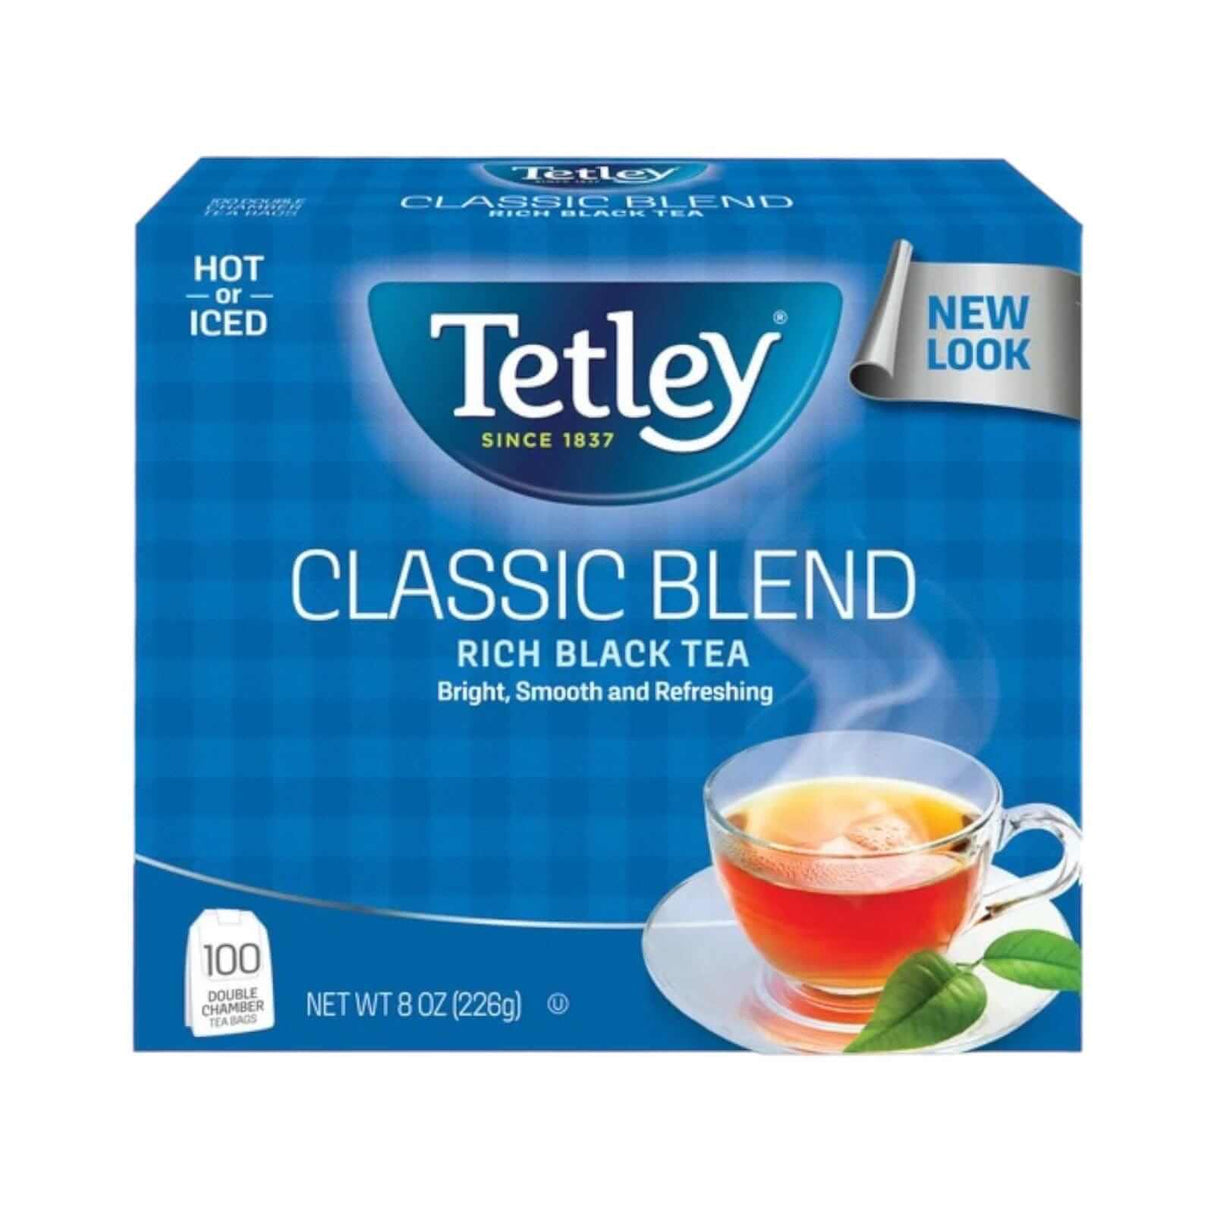 Tetley Classic Blend Rich Black Tea